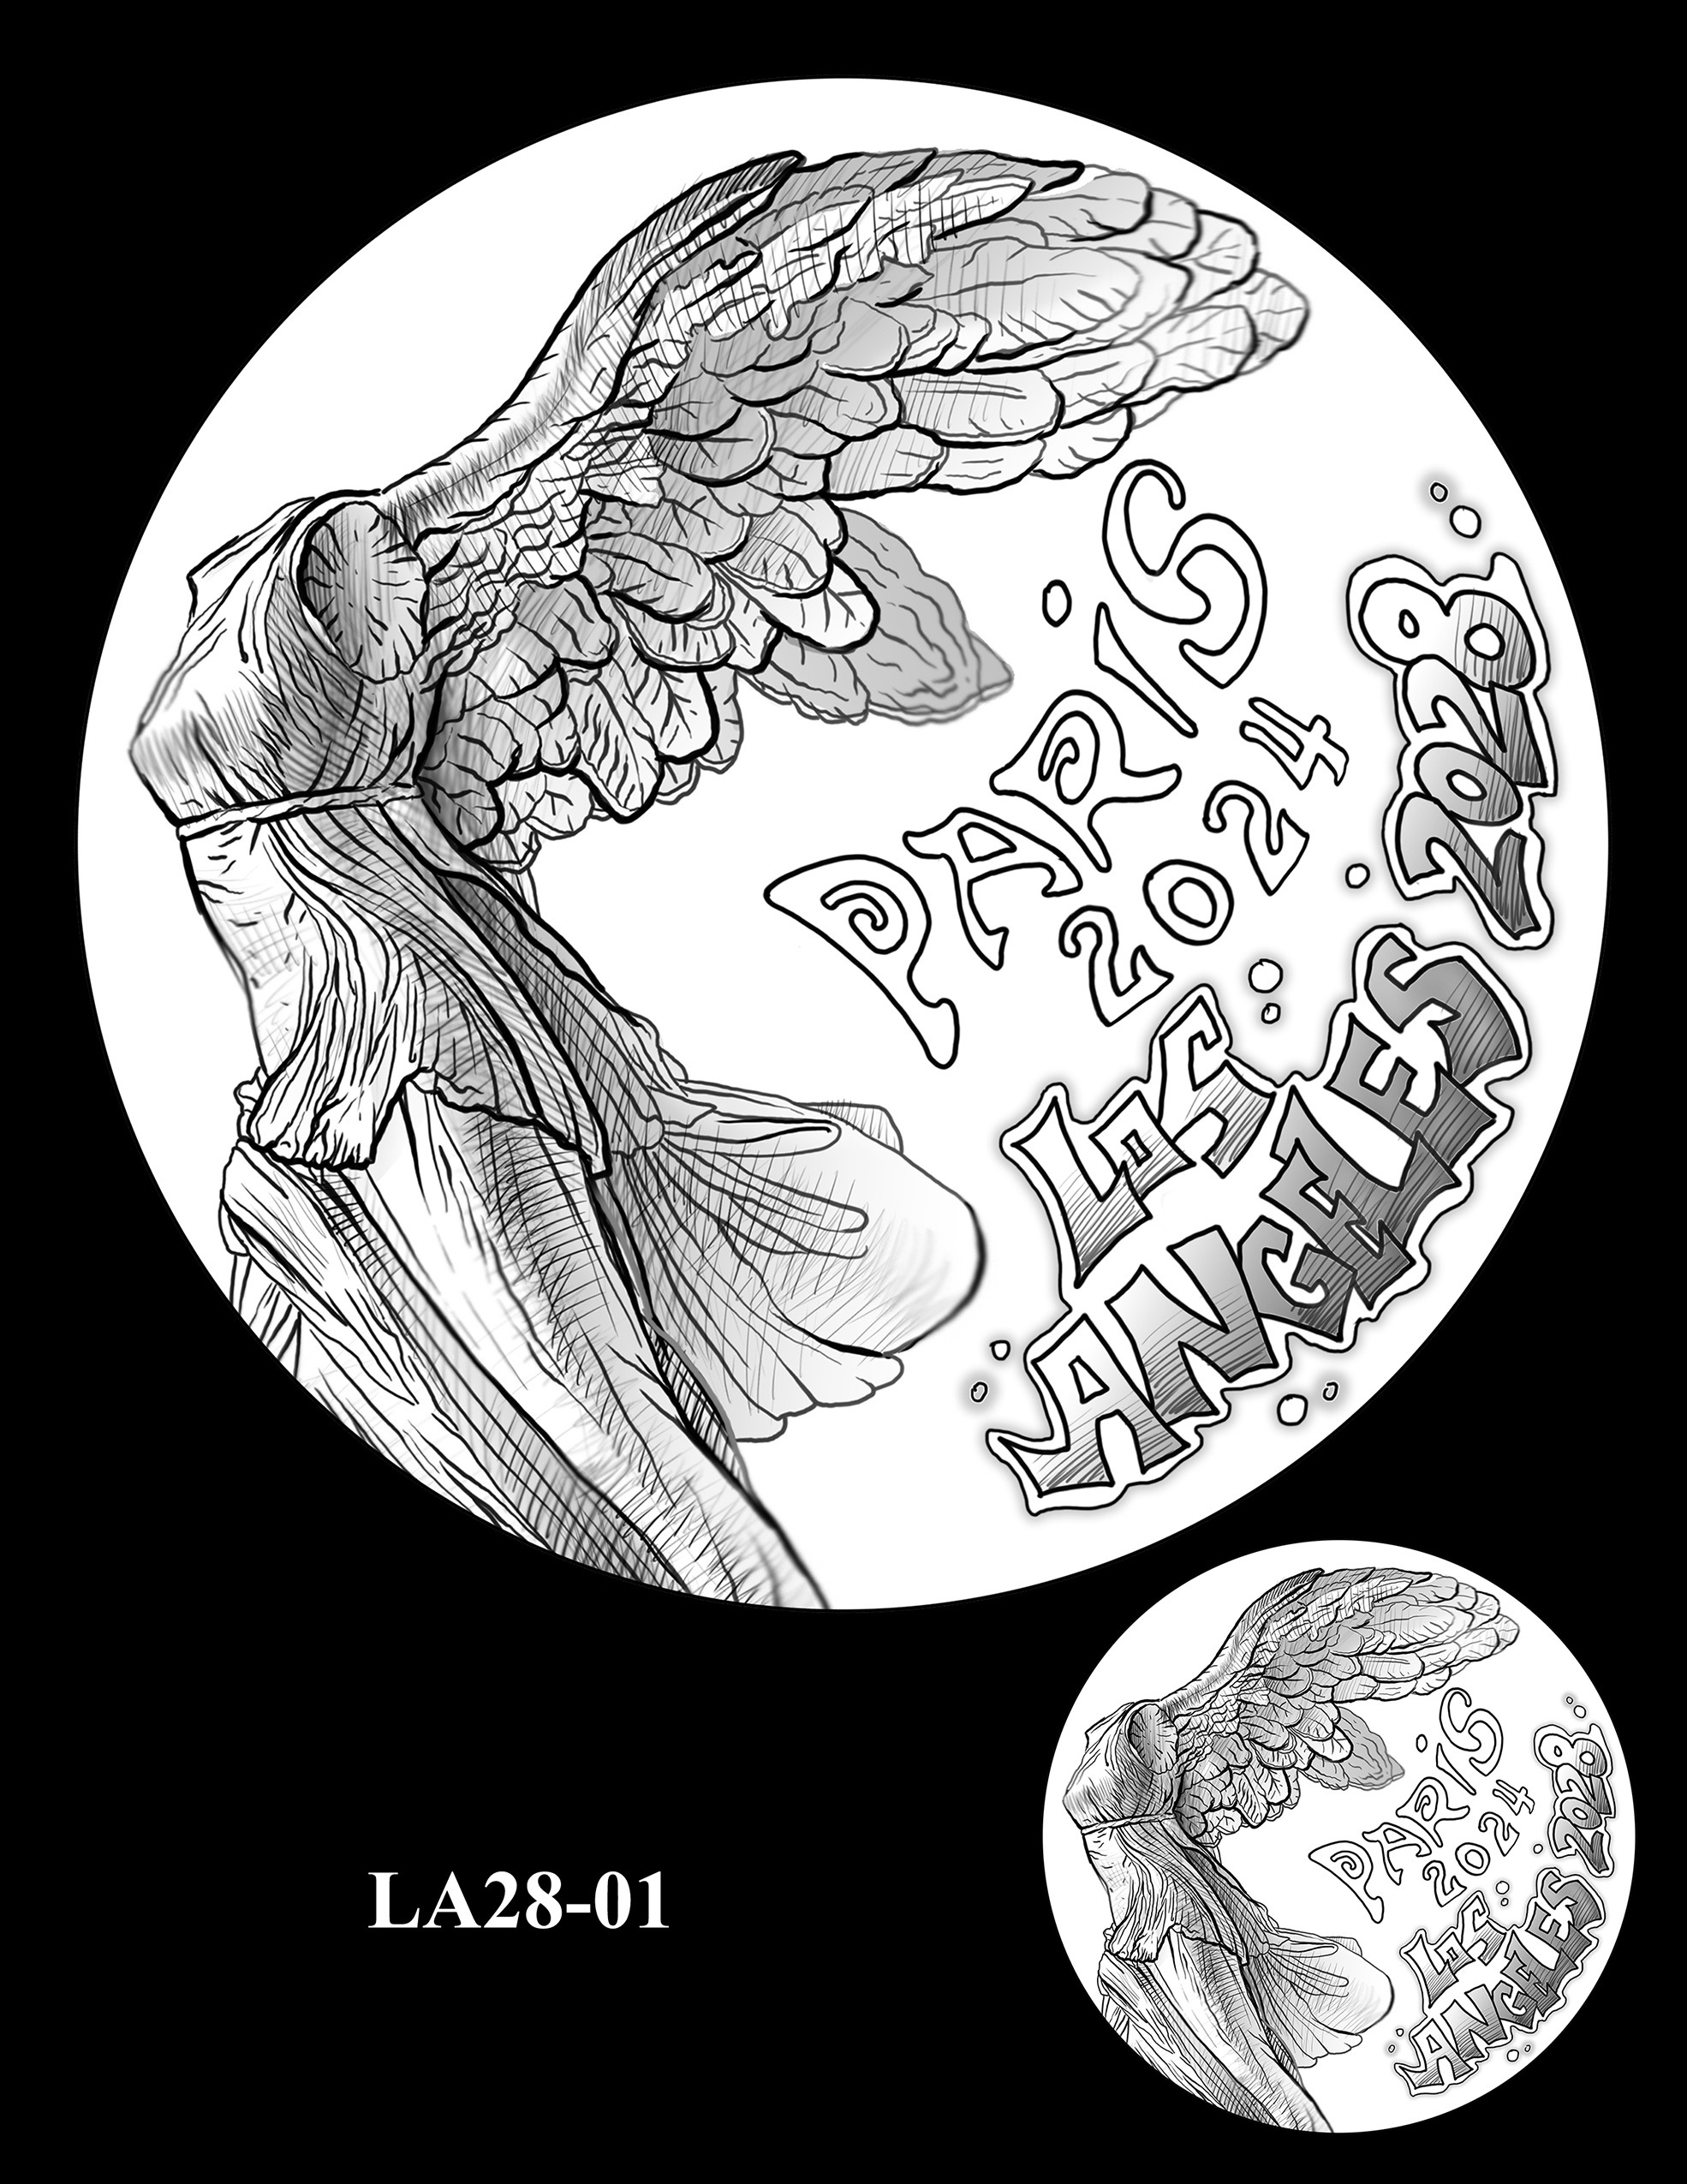 LA28-01 -- Olympics Handover Medallion